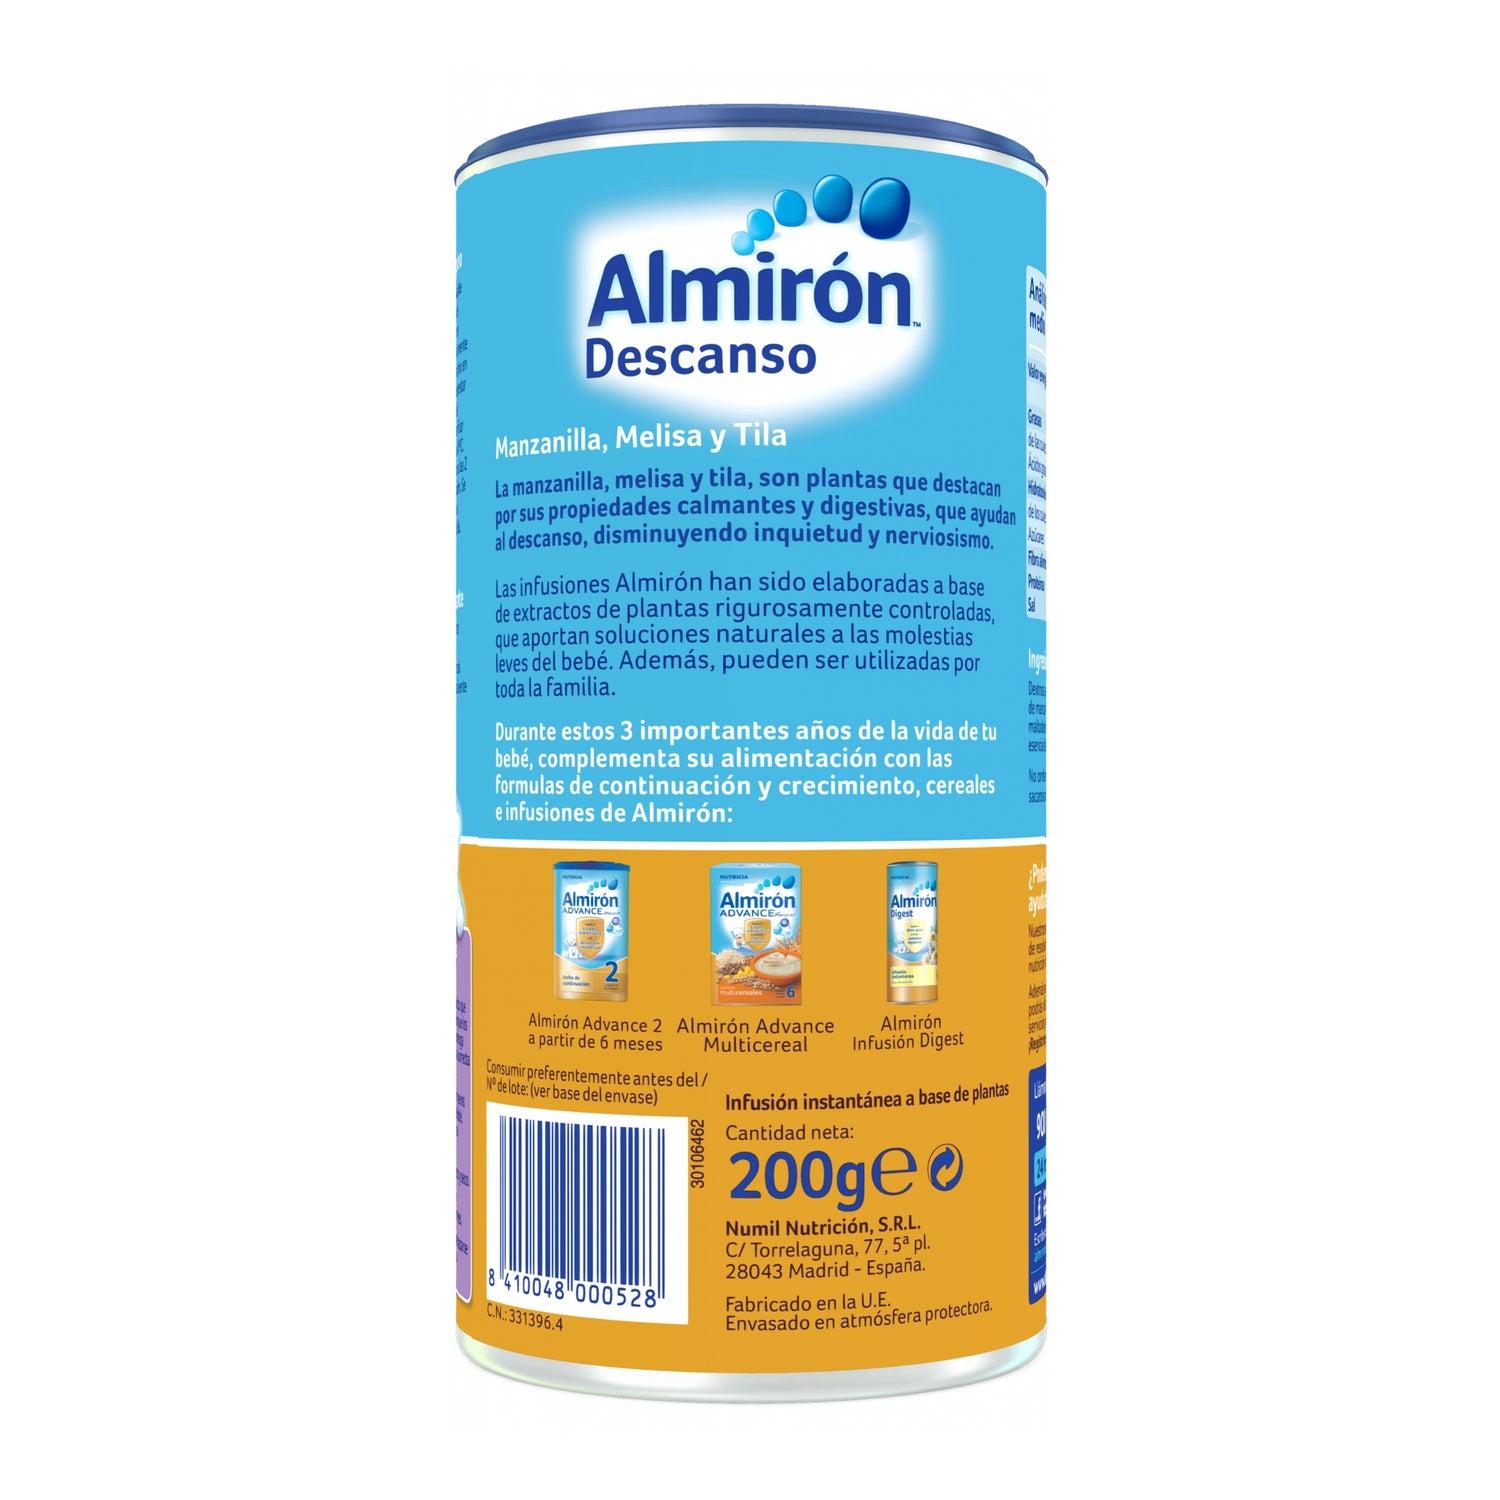 Almiron profutura 2 duplo duobiotik bi 800 g